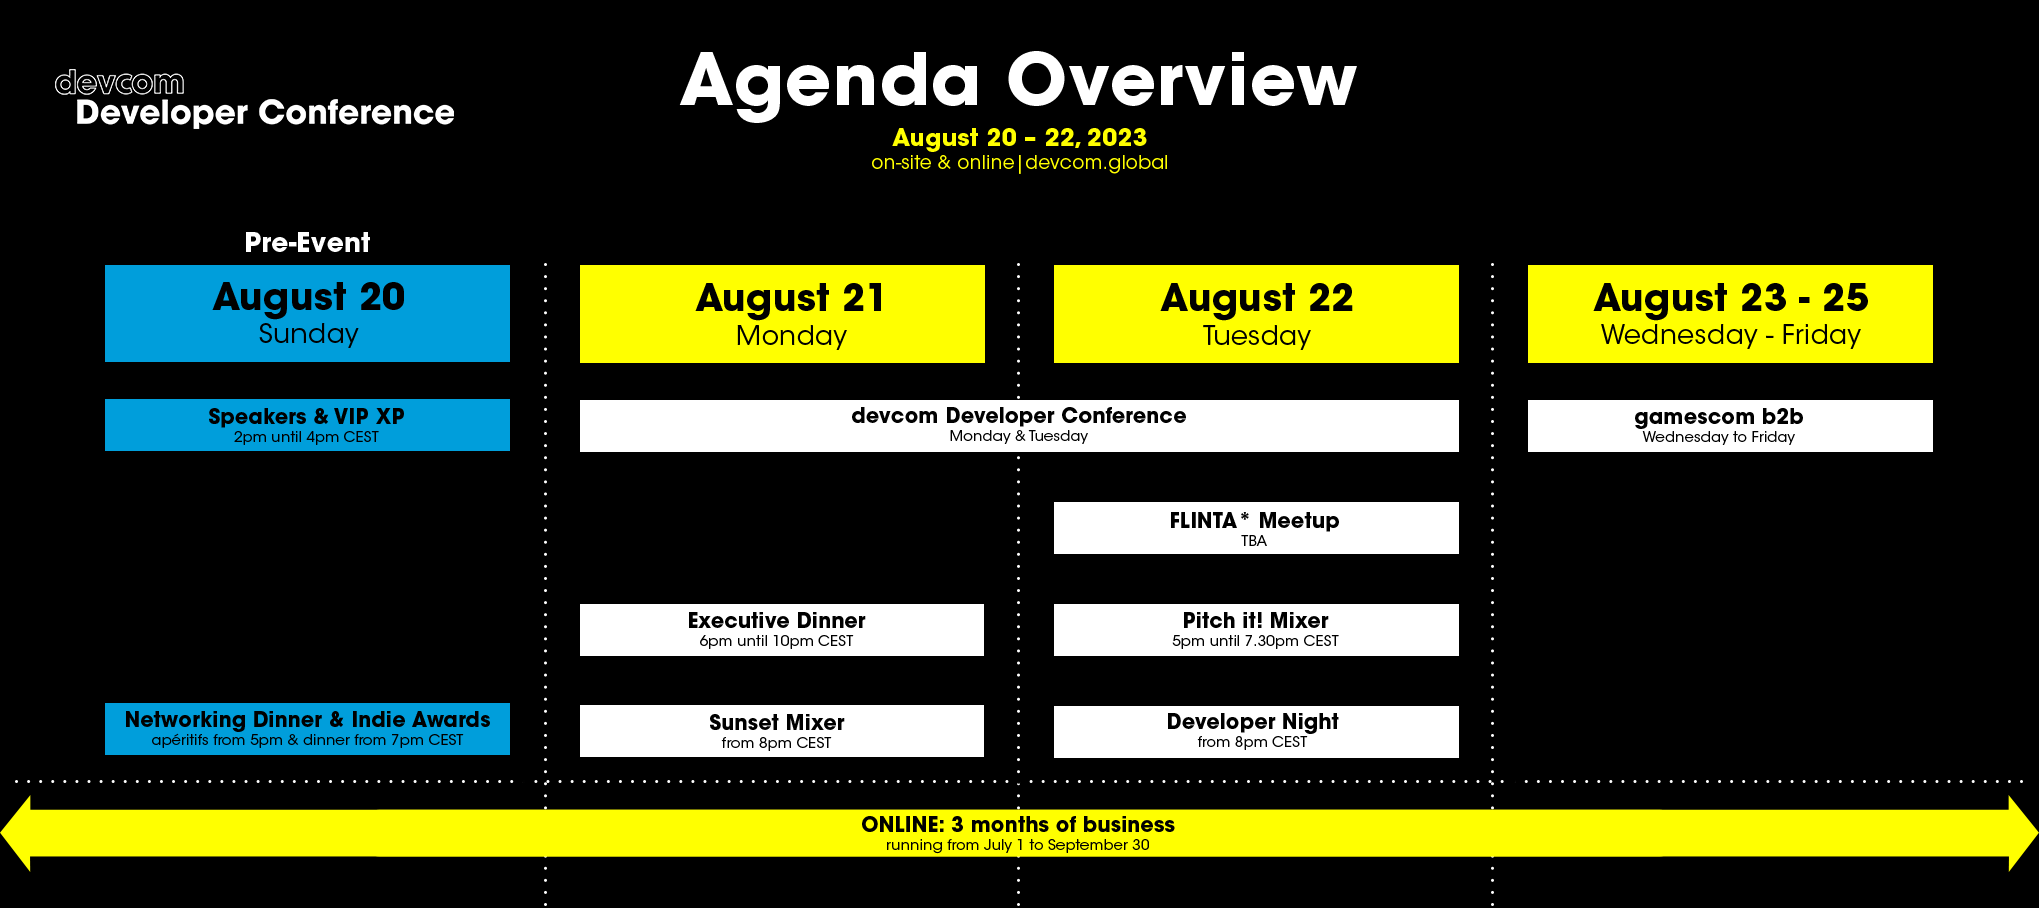 Overview of agenda points during devcom developer conference